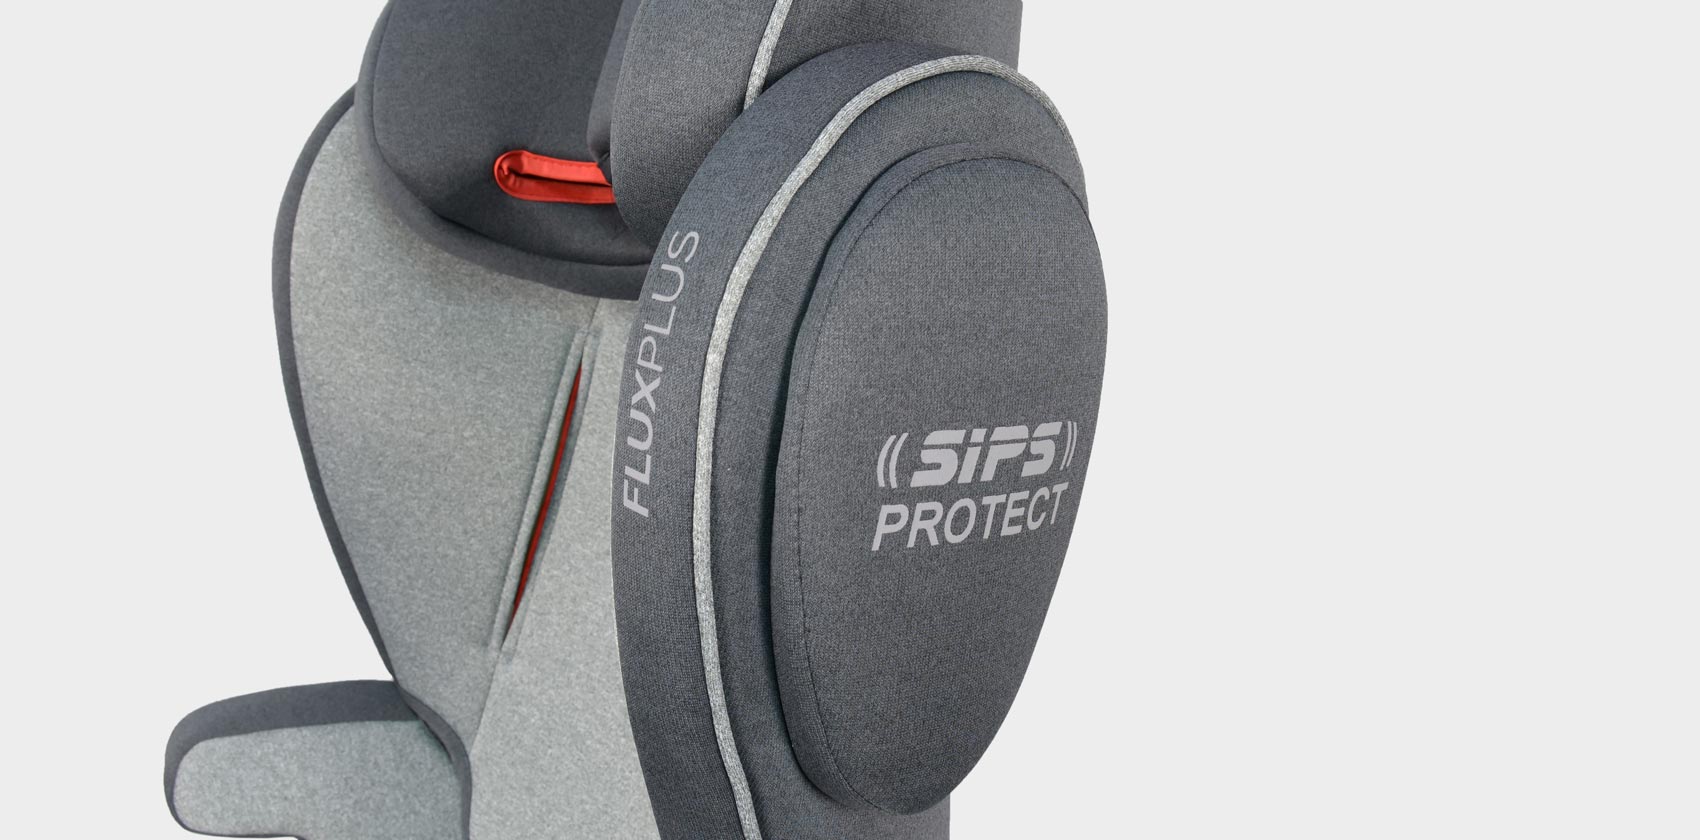 Osann Flux Plus боковая защита SIPS Protect